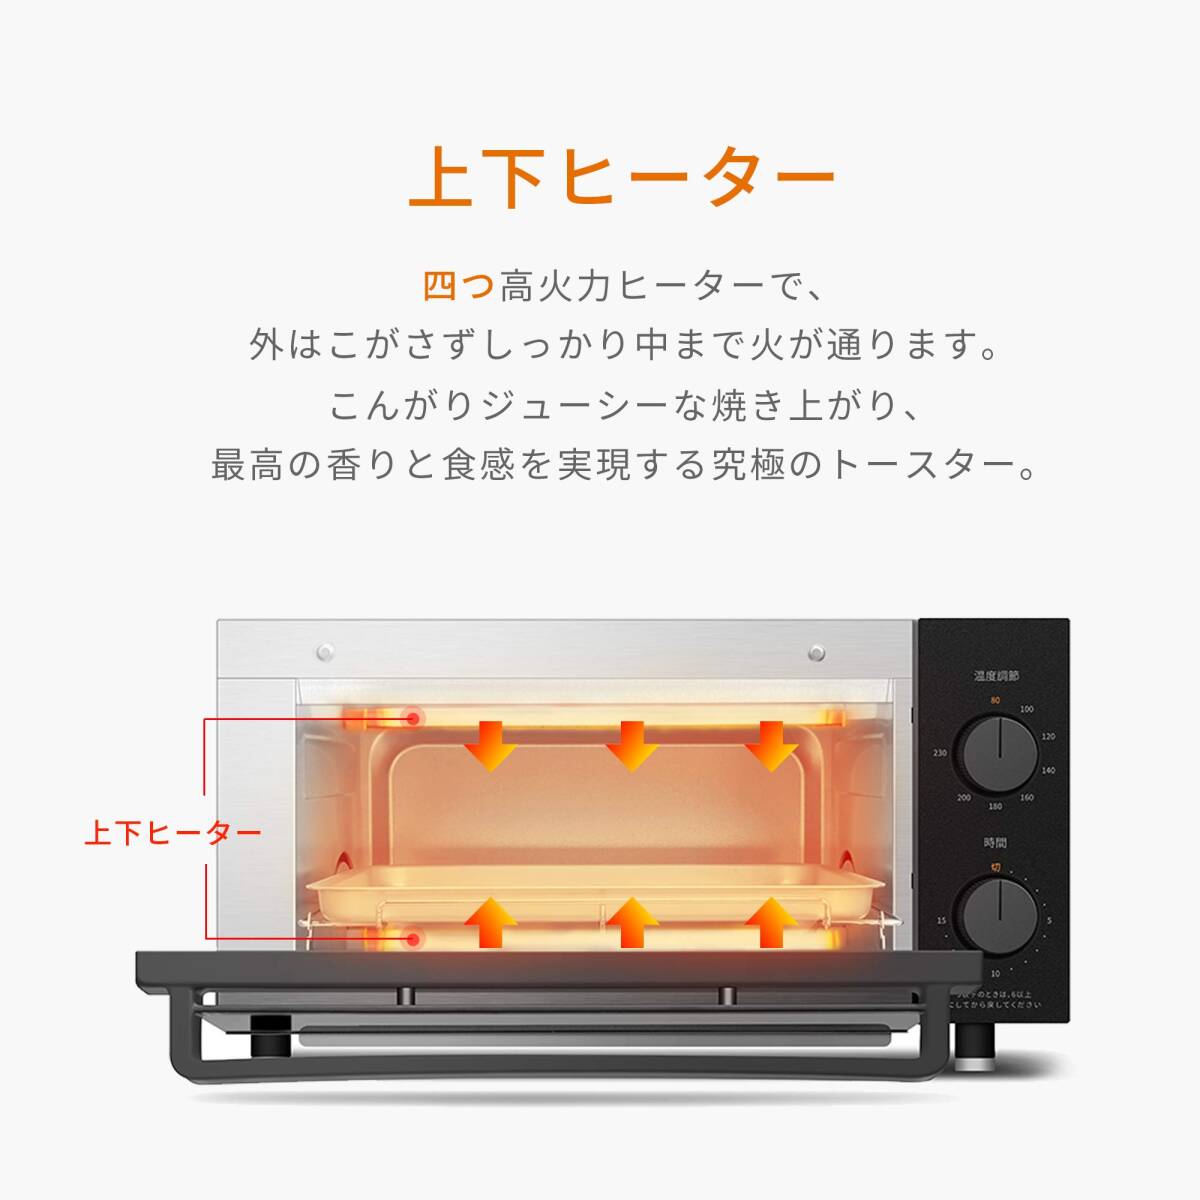 COMFEE' オーブントースター 4枚焼き トースト 12L 広い庫内 タイマー設定 無段階 温度調節 1200W 上下 4本ヒーター トレー_画像5